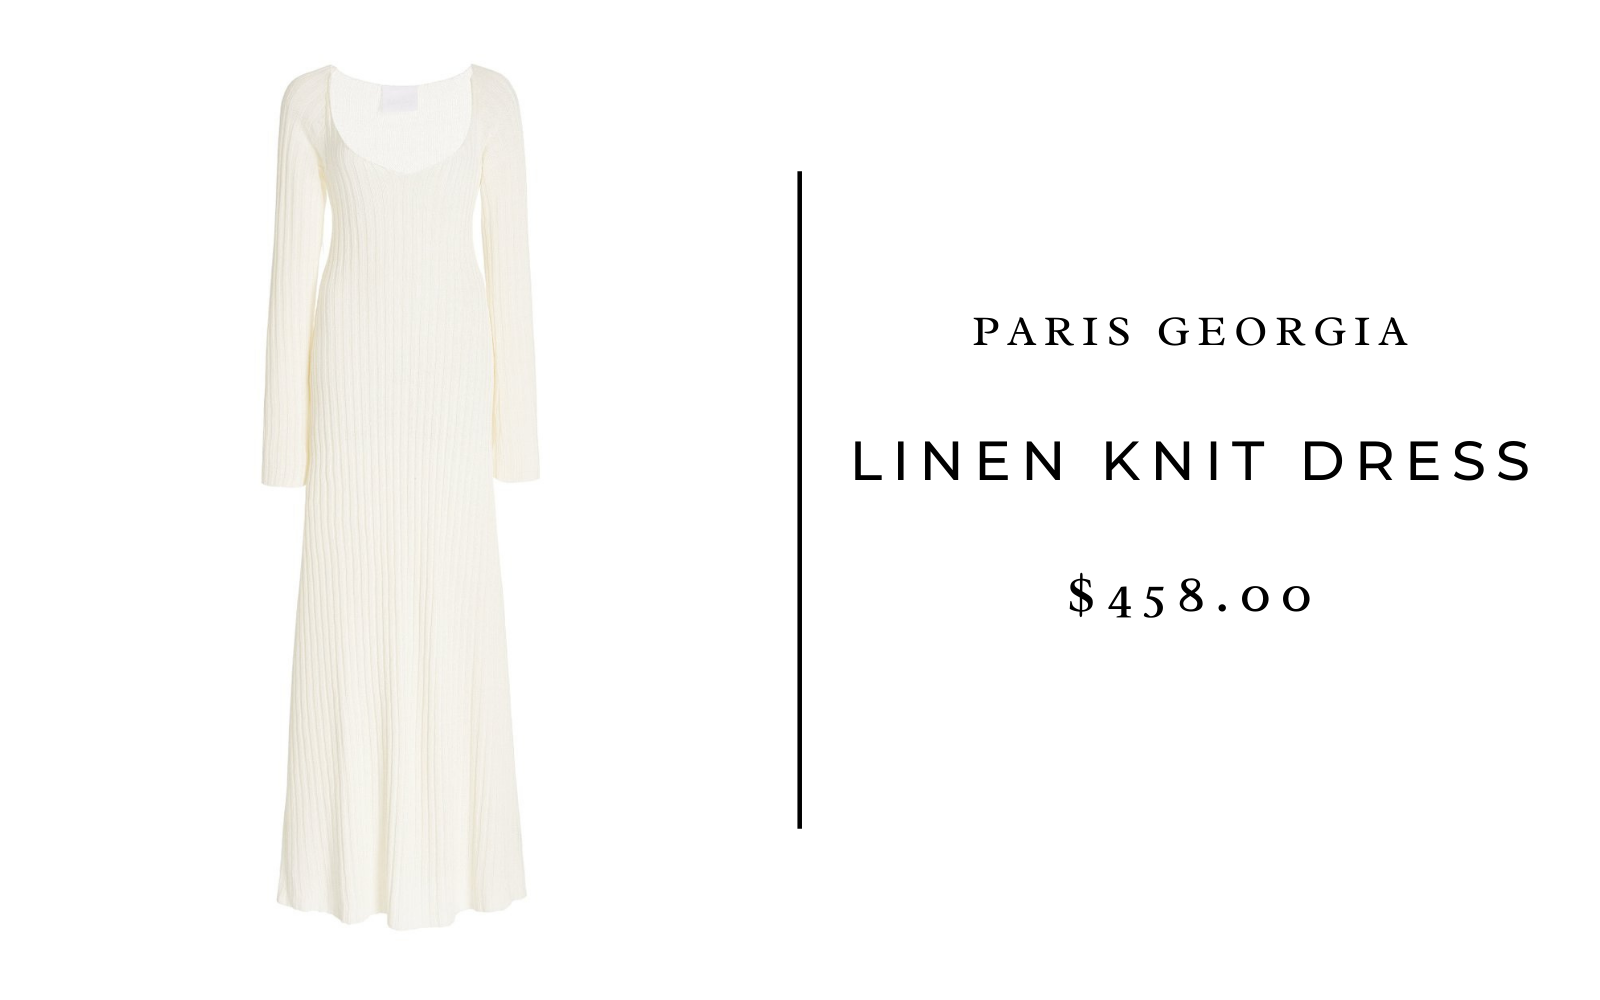 Paris Georgia Linen Knit Dress